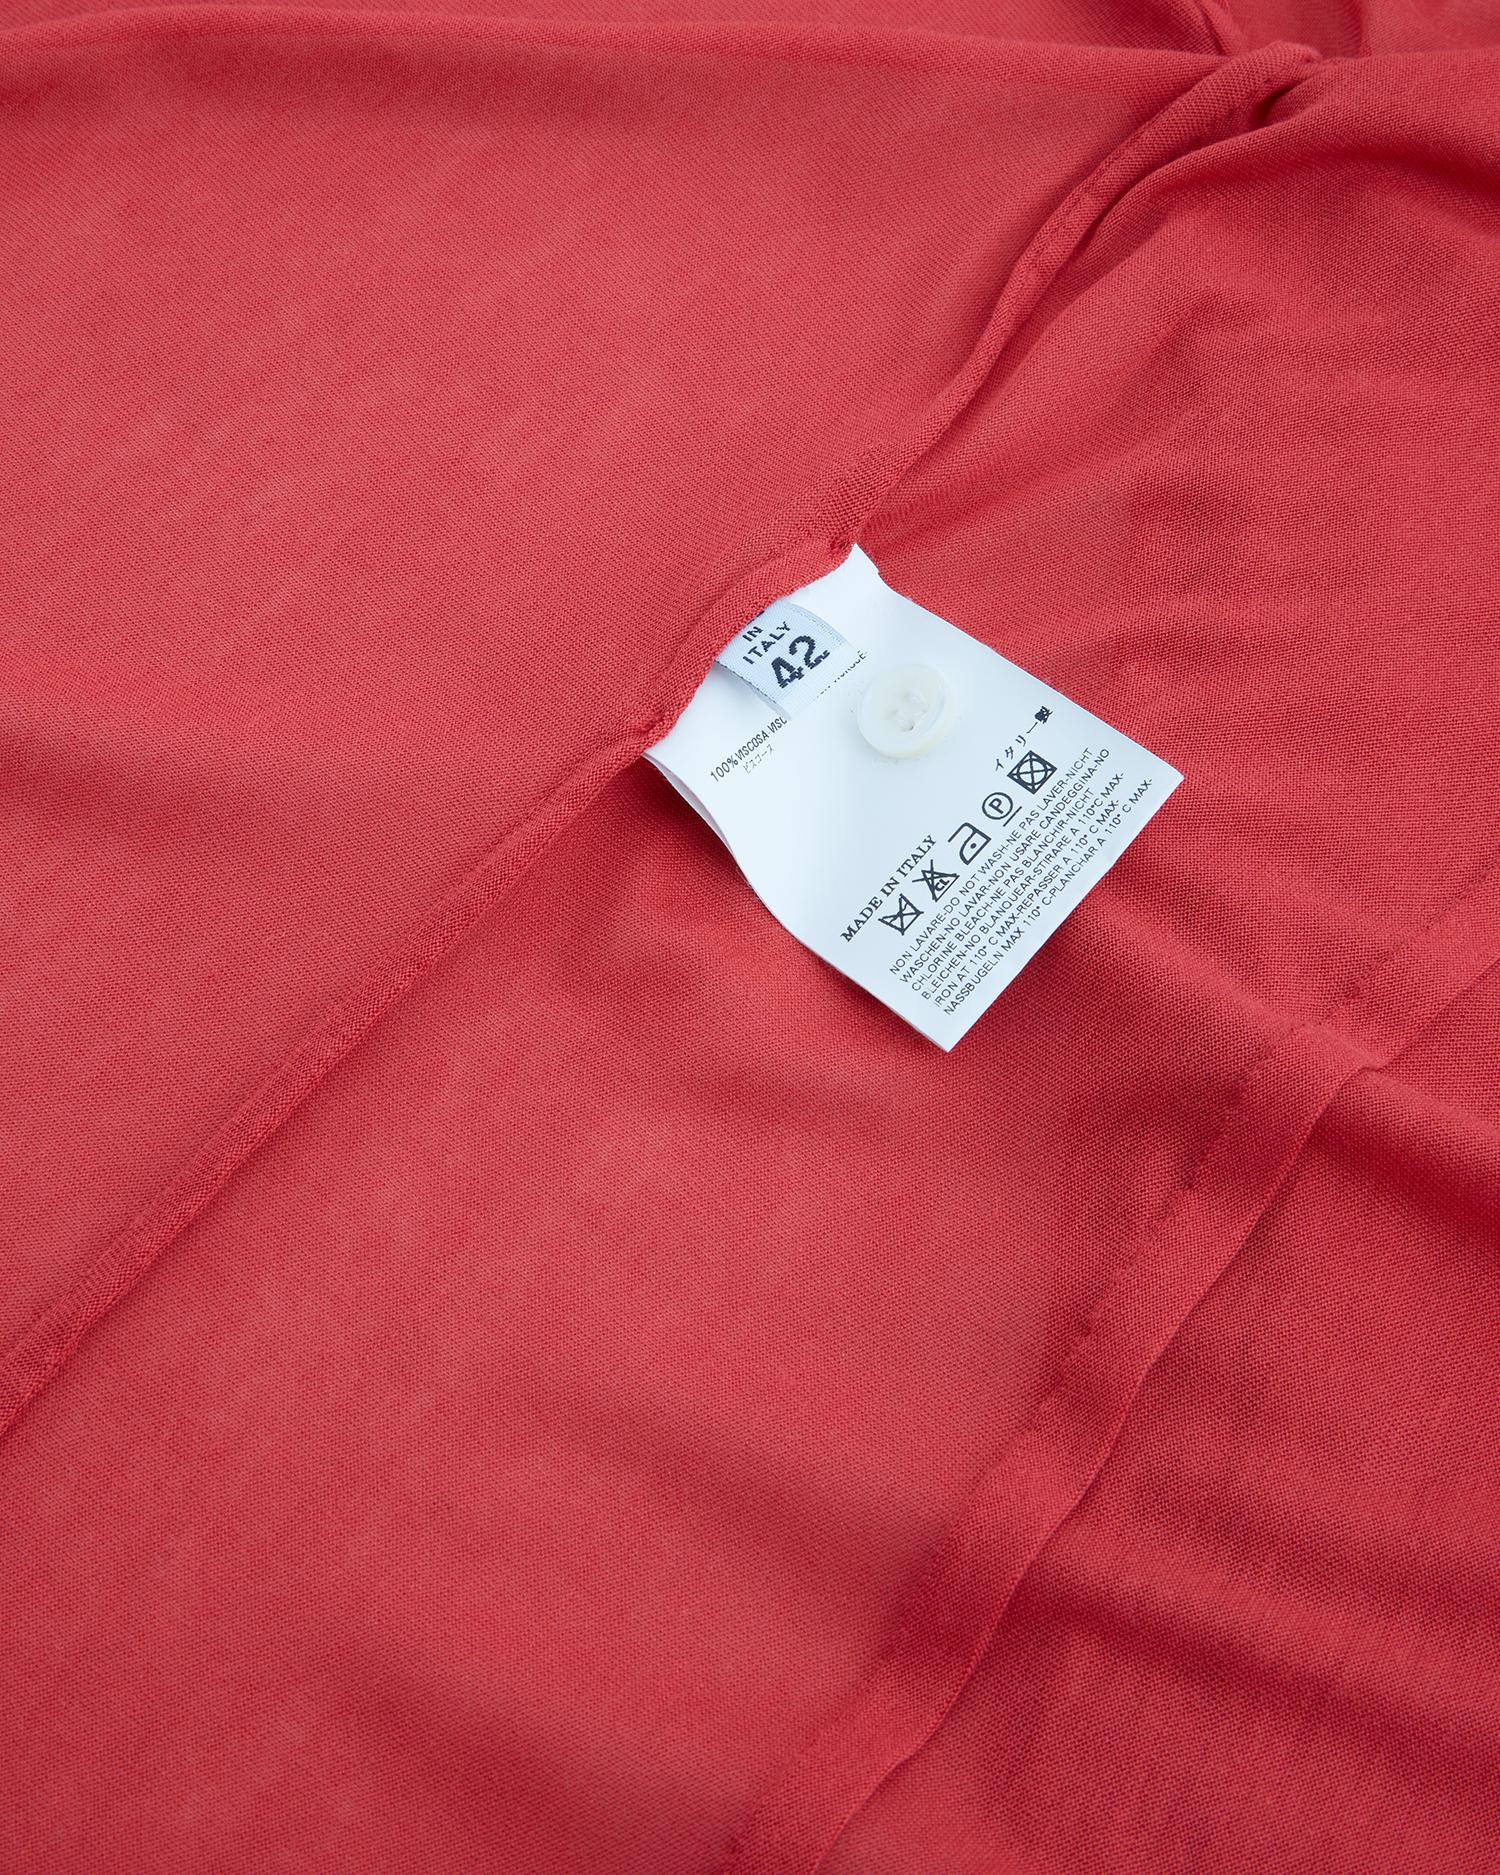 Maison Martin Margiela red viscosa shirt, ss 2001 For Sale 1